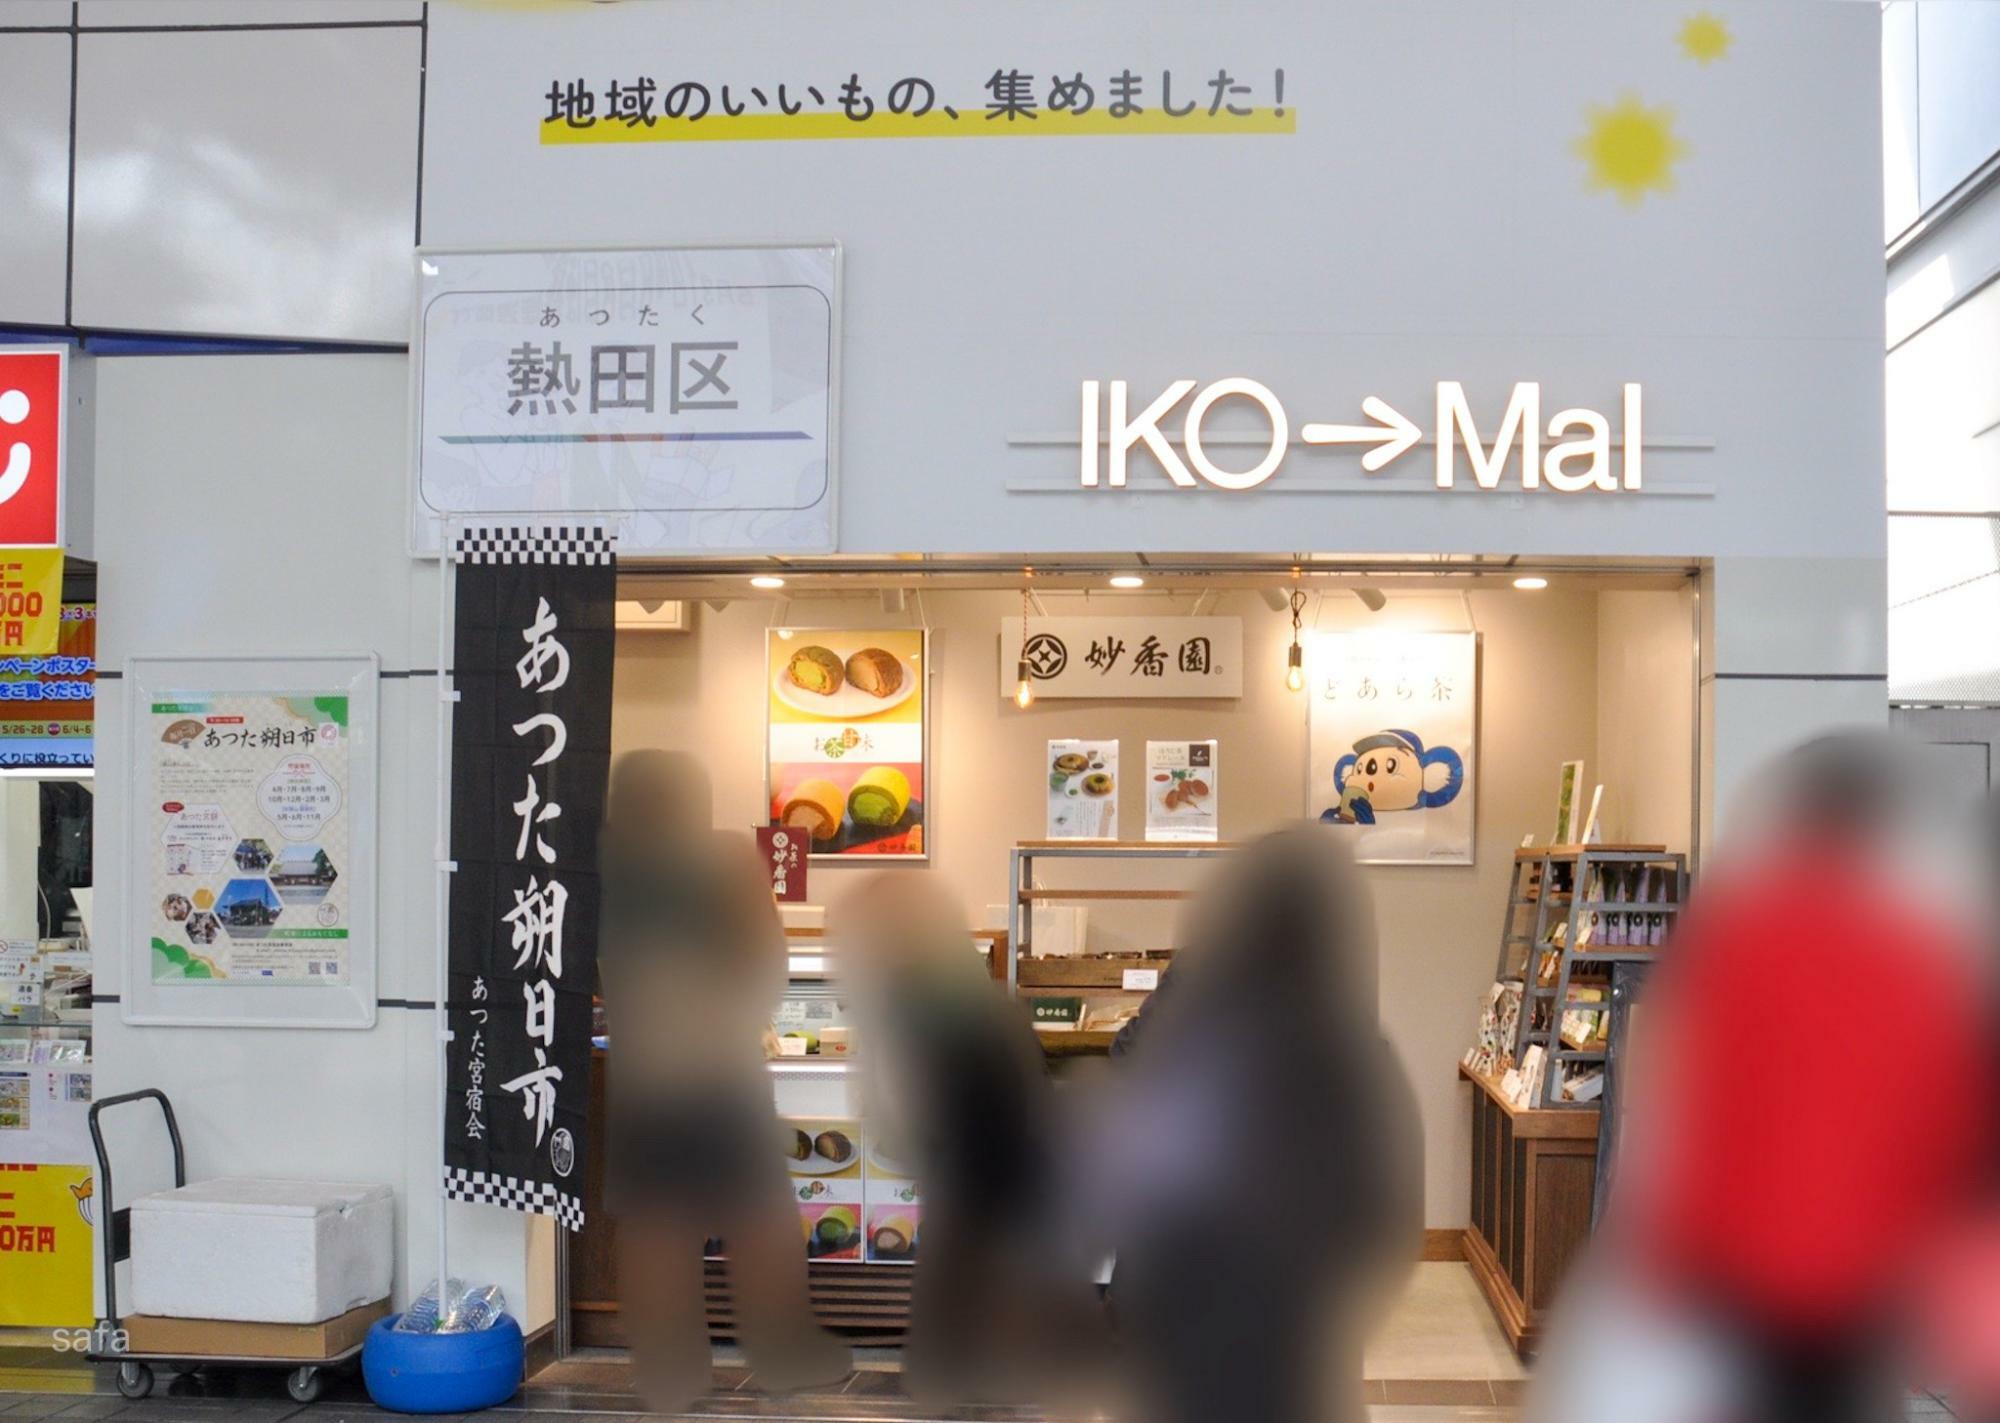 IKO→MaI。店内には約30種類の商品が並びます。この時期ならではの新茶はもちろん、和紅茶、ジャスミン茶も。